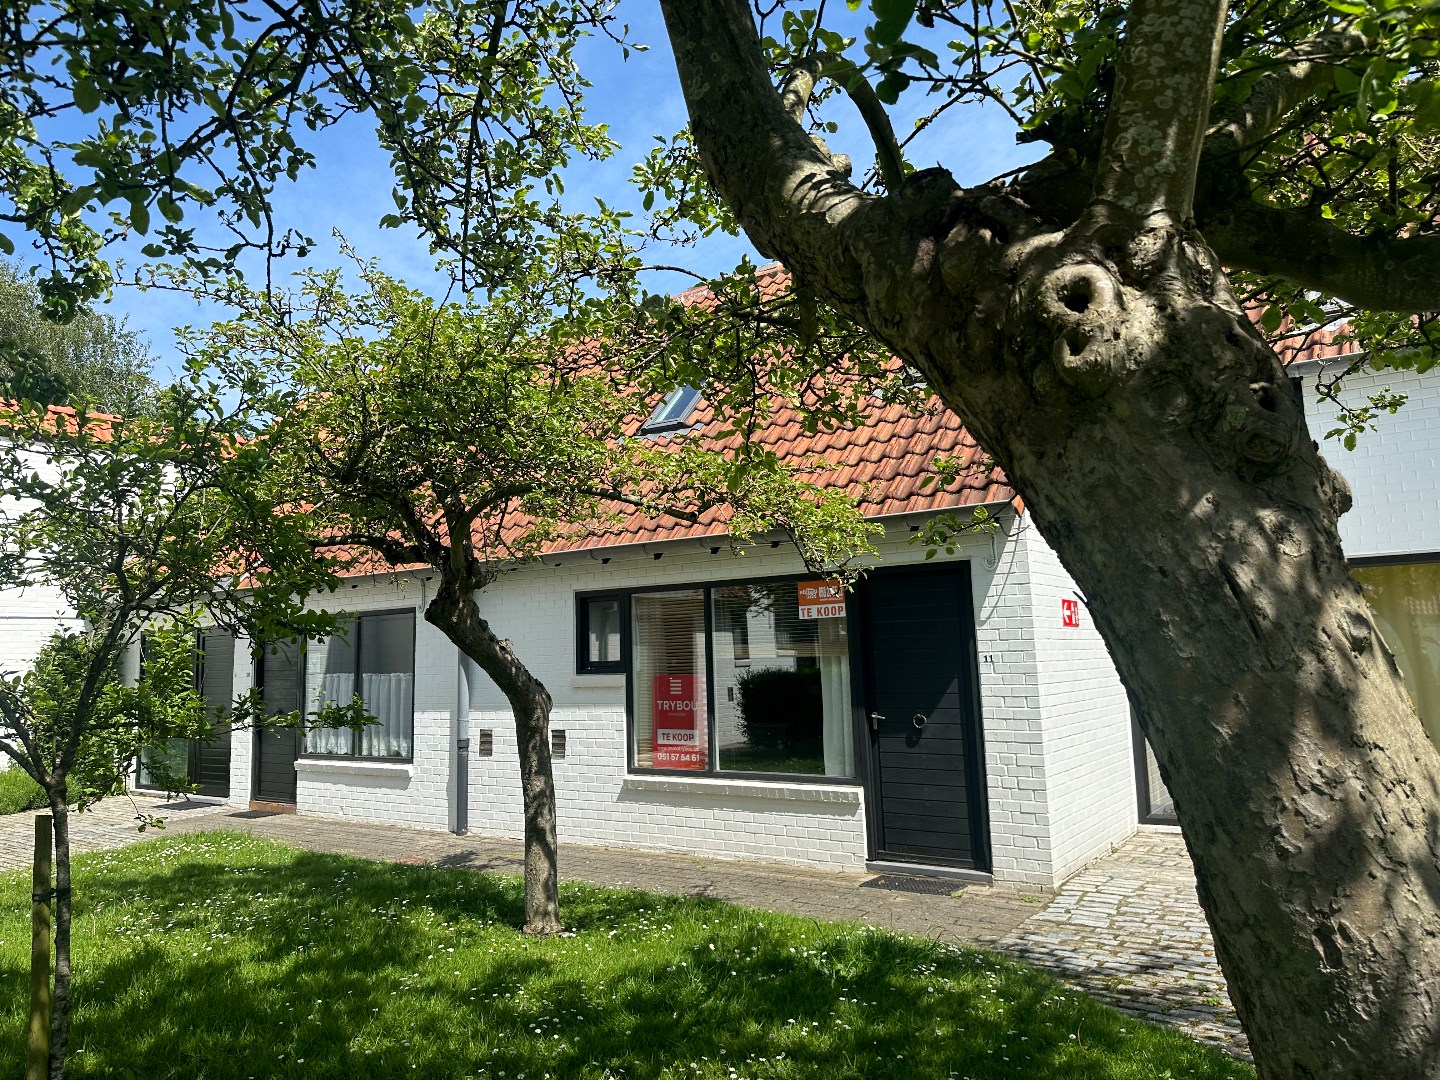 Gerenoveerde (vakantie)woning in het domein 'Ysermonde' te Nieuwpoort foto 1